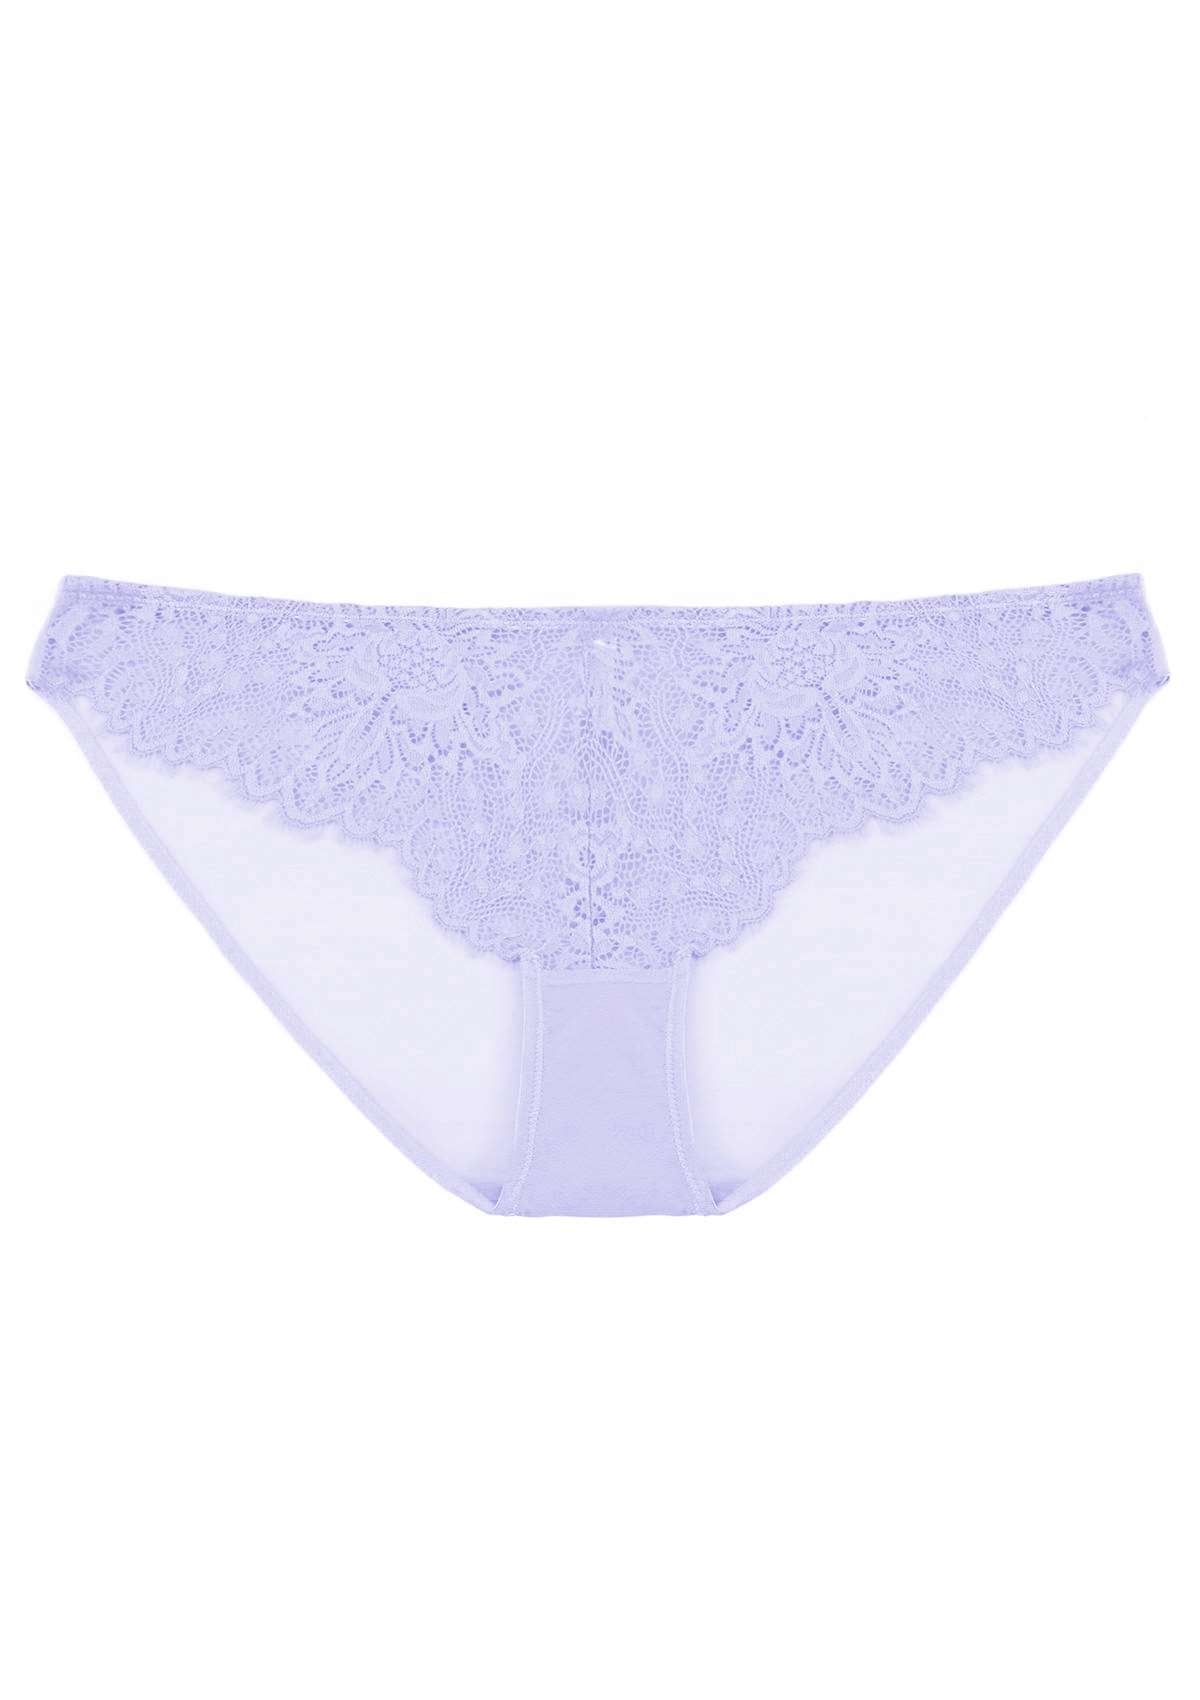 HSIA Sunflower Exquisite Lace Bikini Underwear - XXXL / Horizon Blue